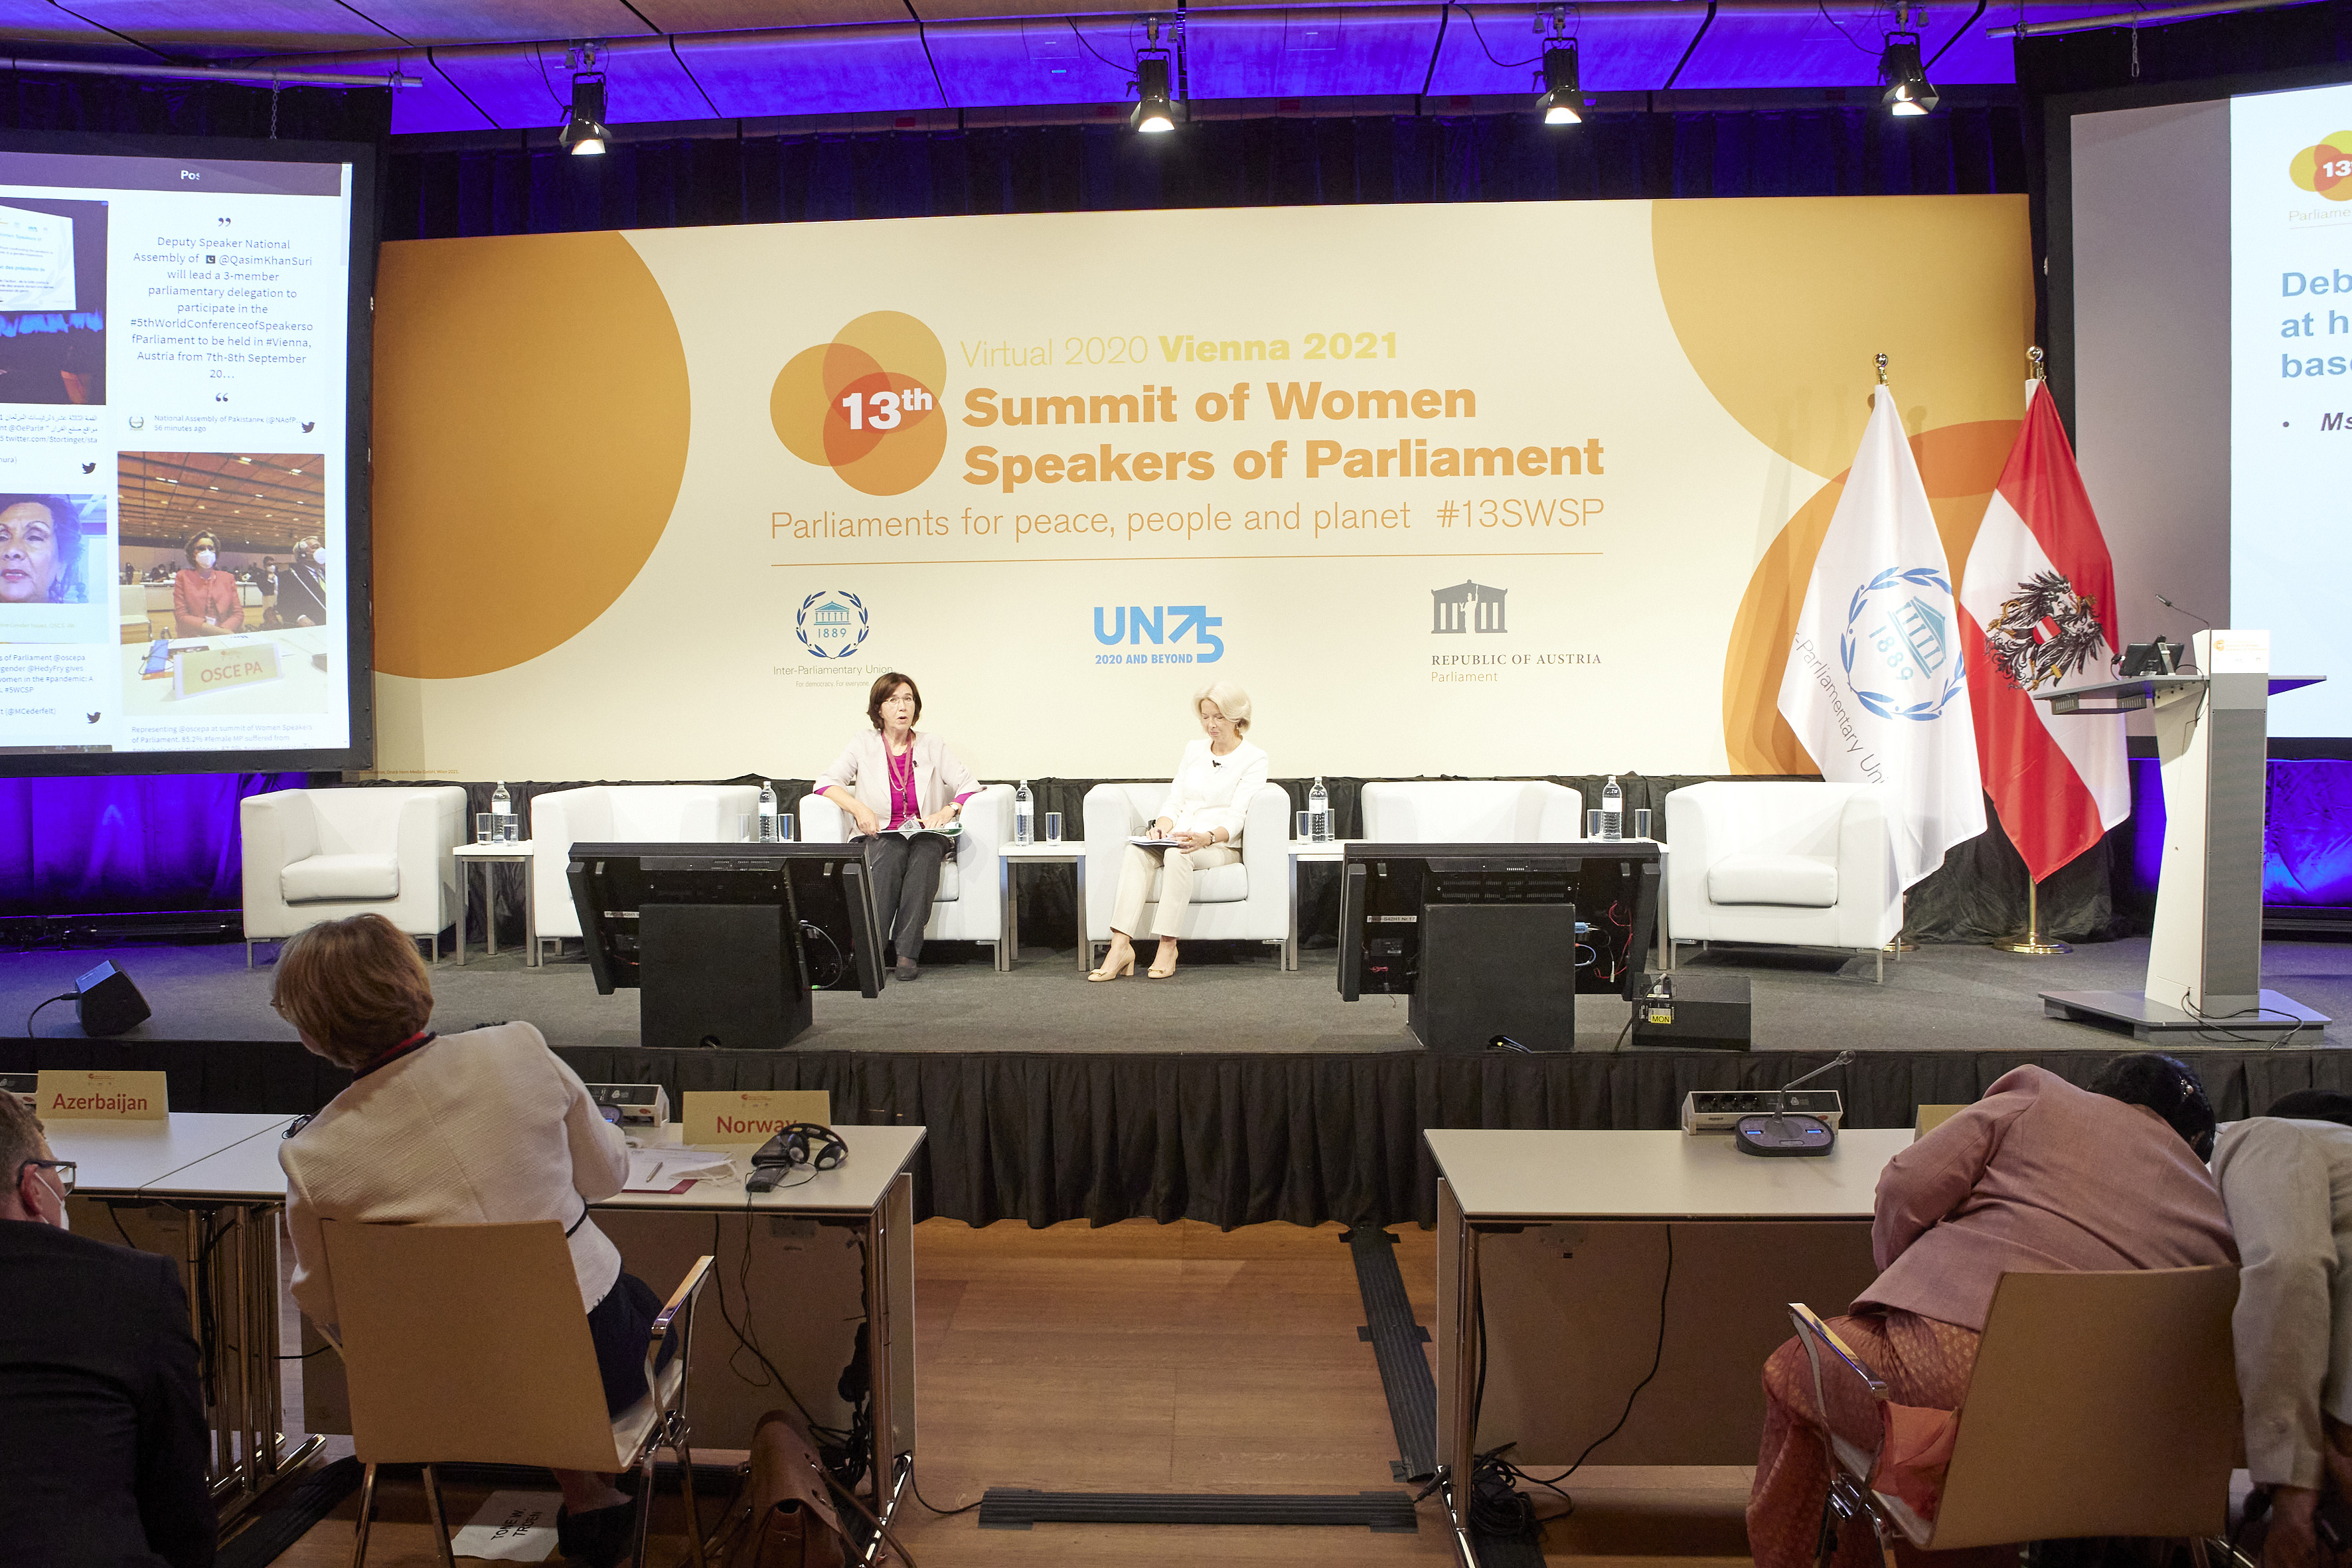 Session 1 – Women Summit